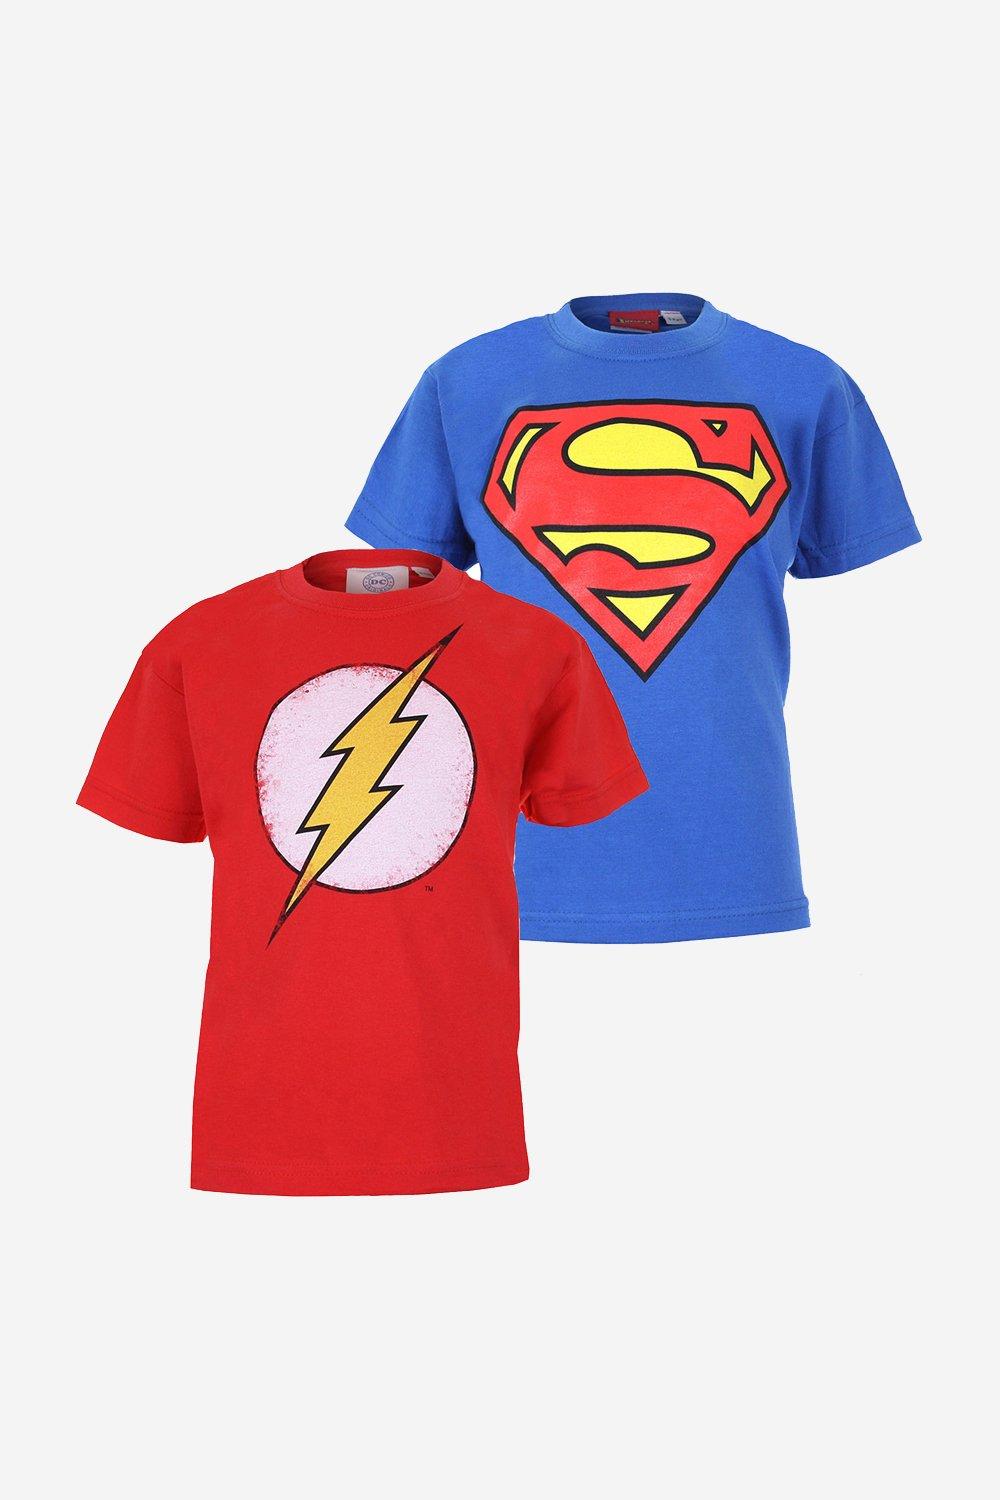 Superman & The Flash Logo Kids T-Shirt 2 Pack